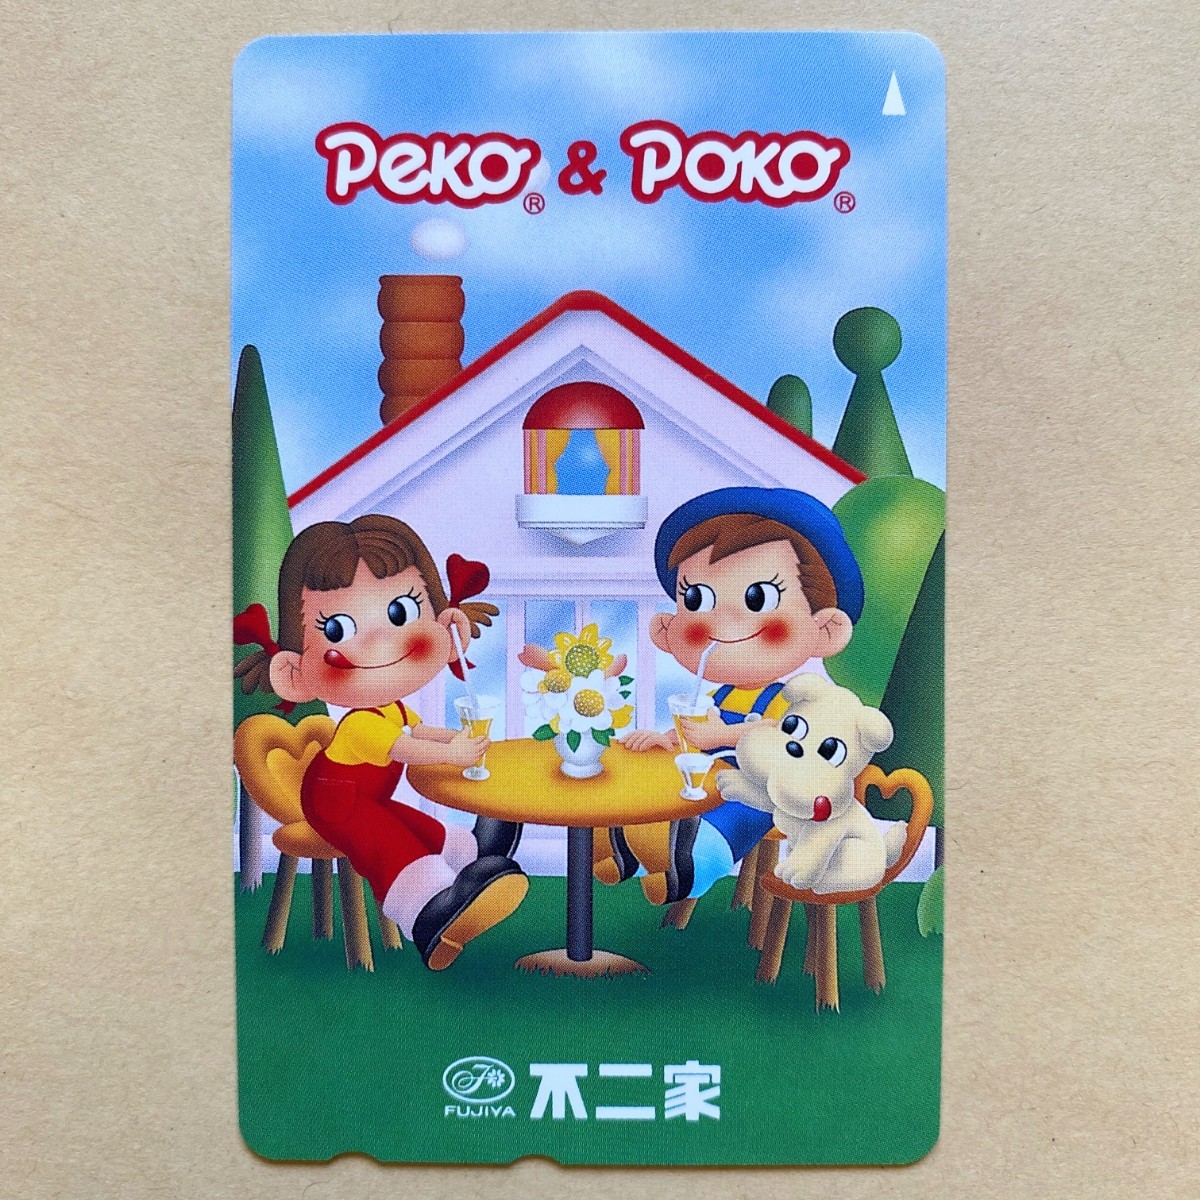 [ unused ] telephone card Peko-chan poko Chan Peko & Poko Fujiya 